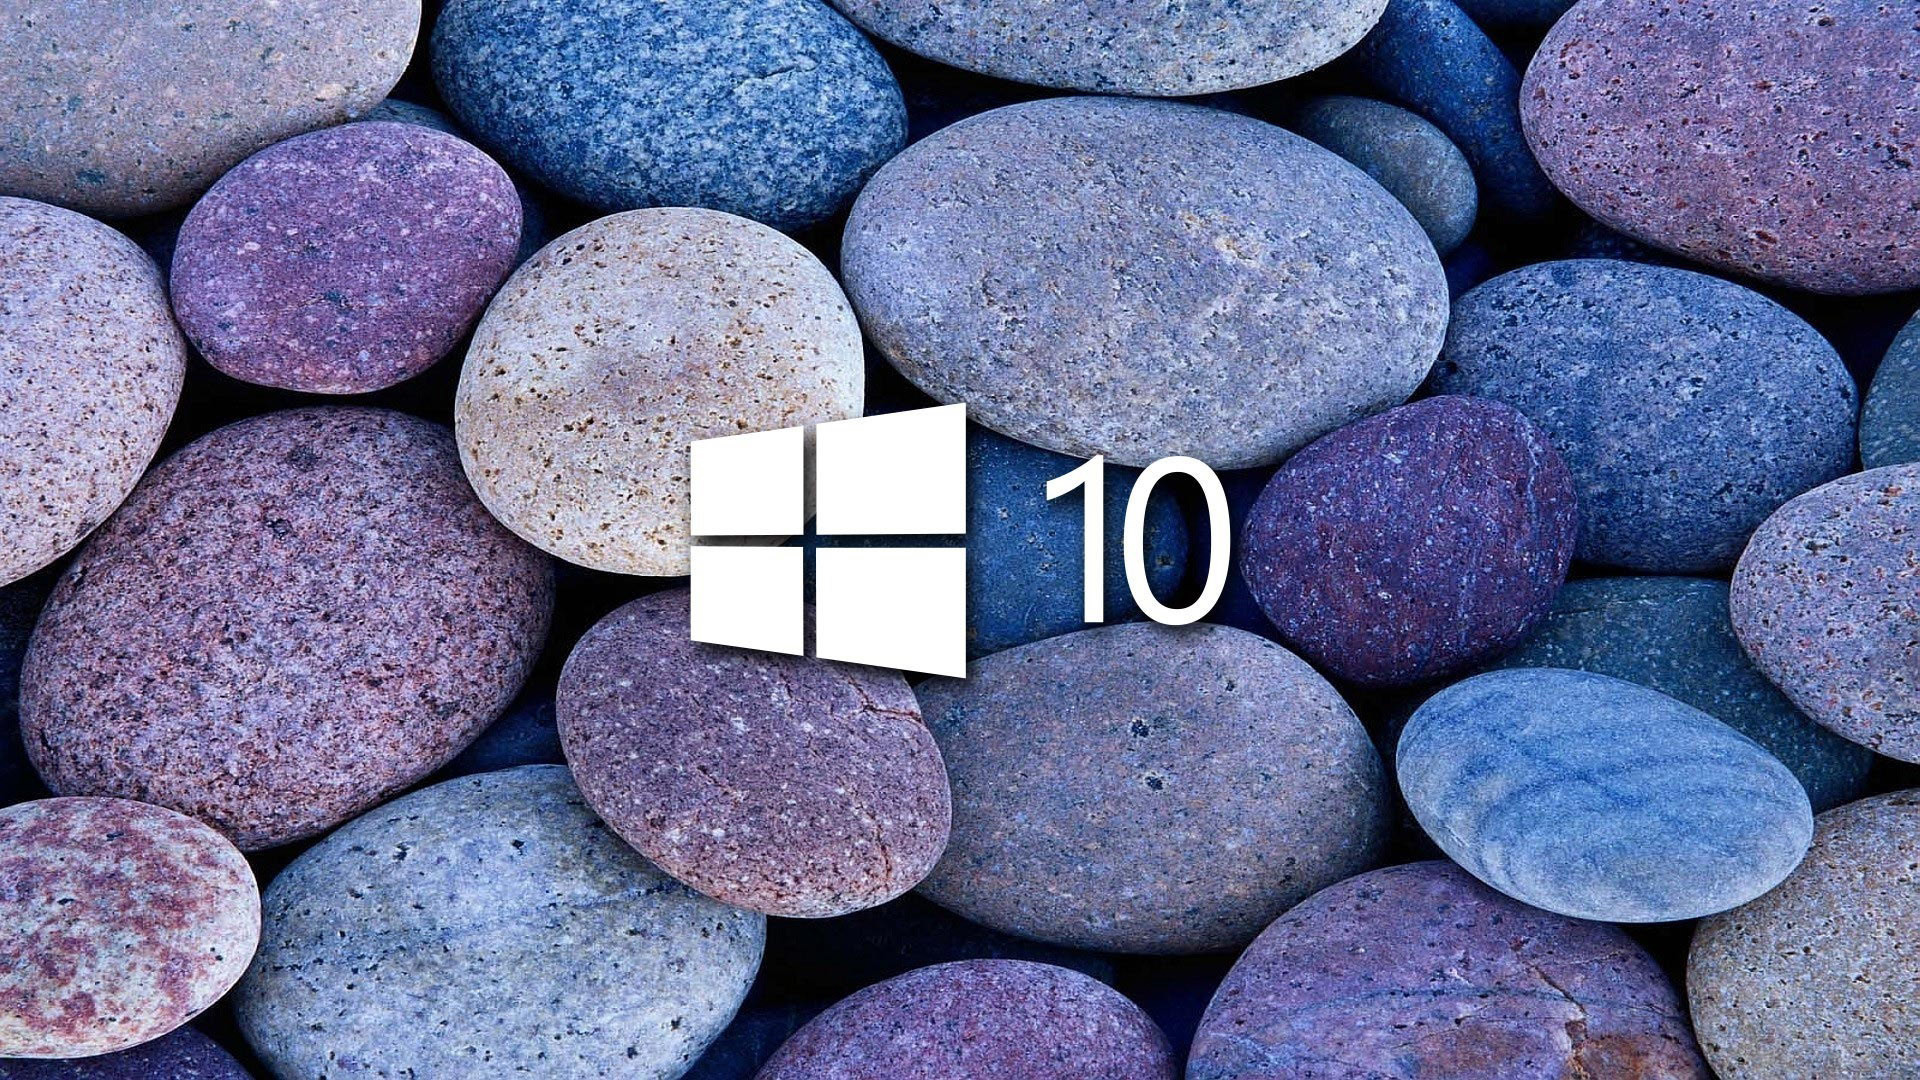 1920x1080 white windows 10 on blue and purple stones